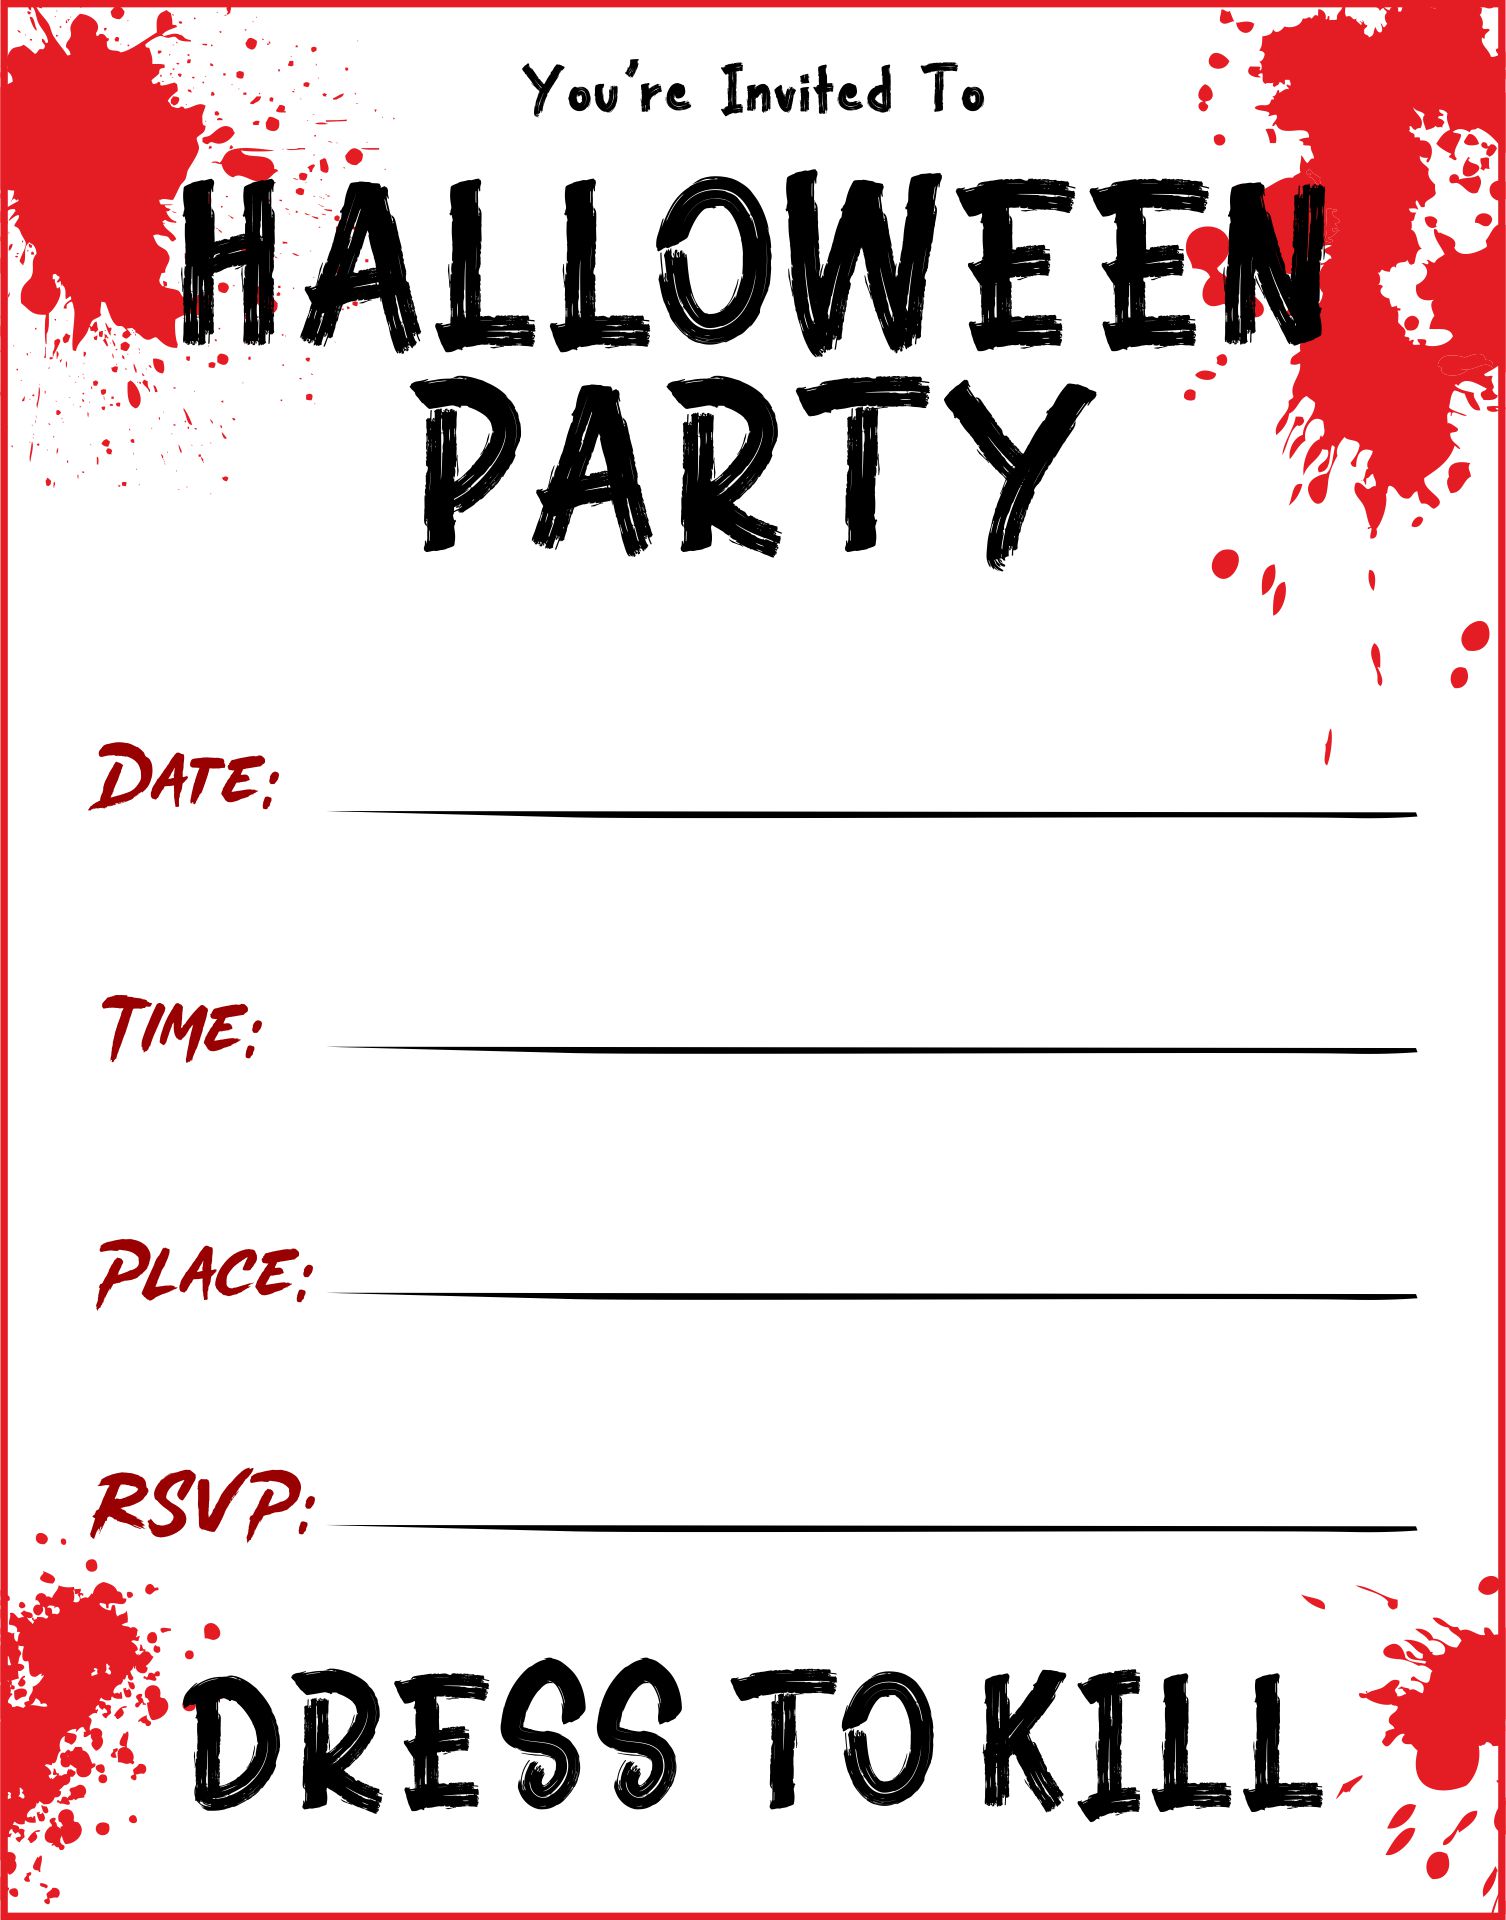 Dress To Kill Blood Splatter Halloween Party Invitation Printable